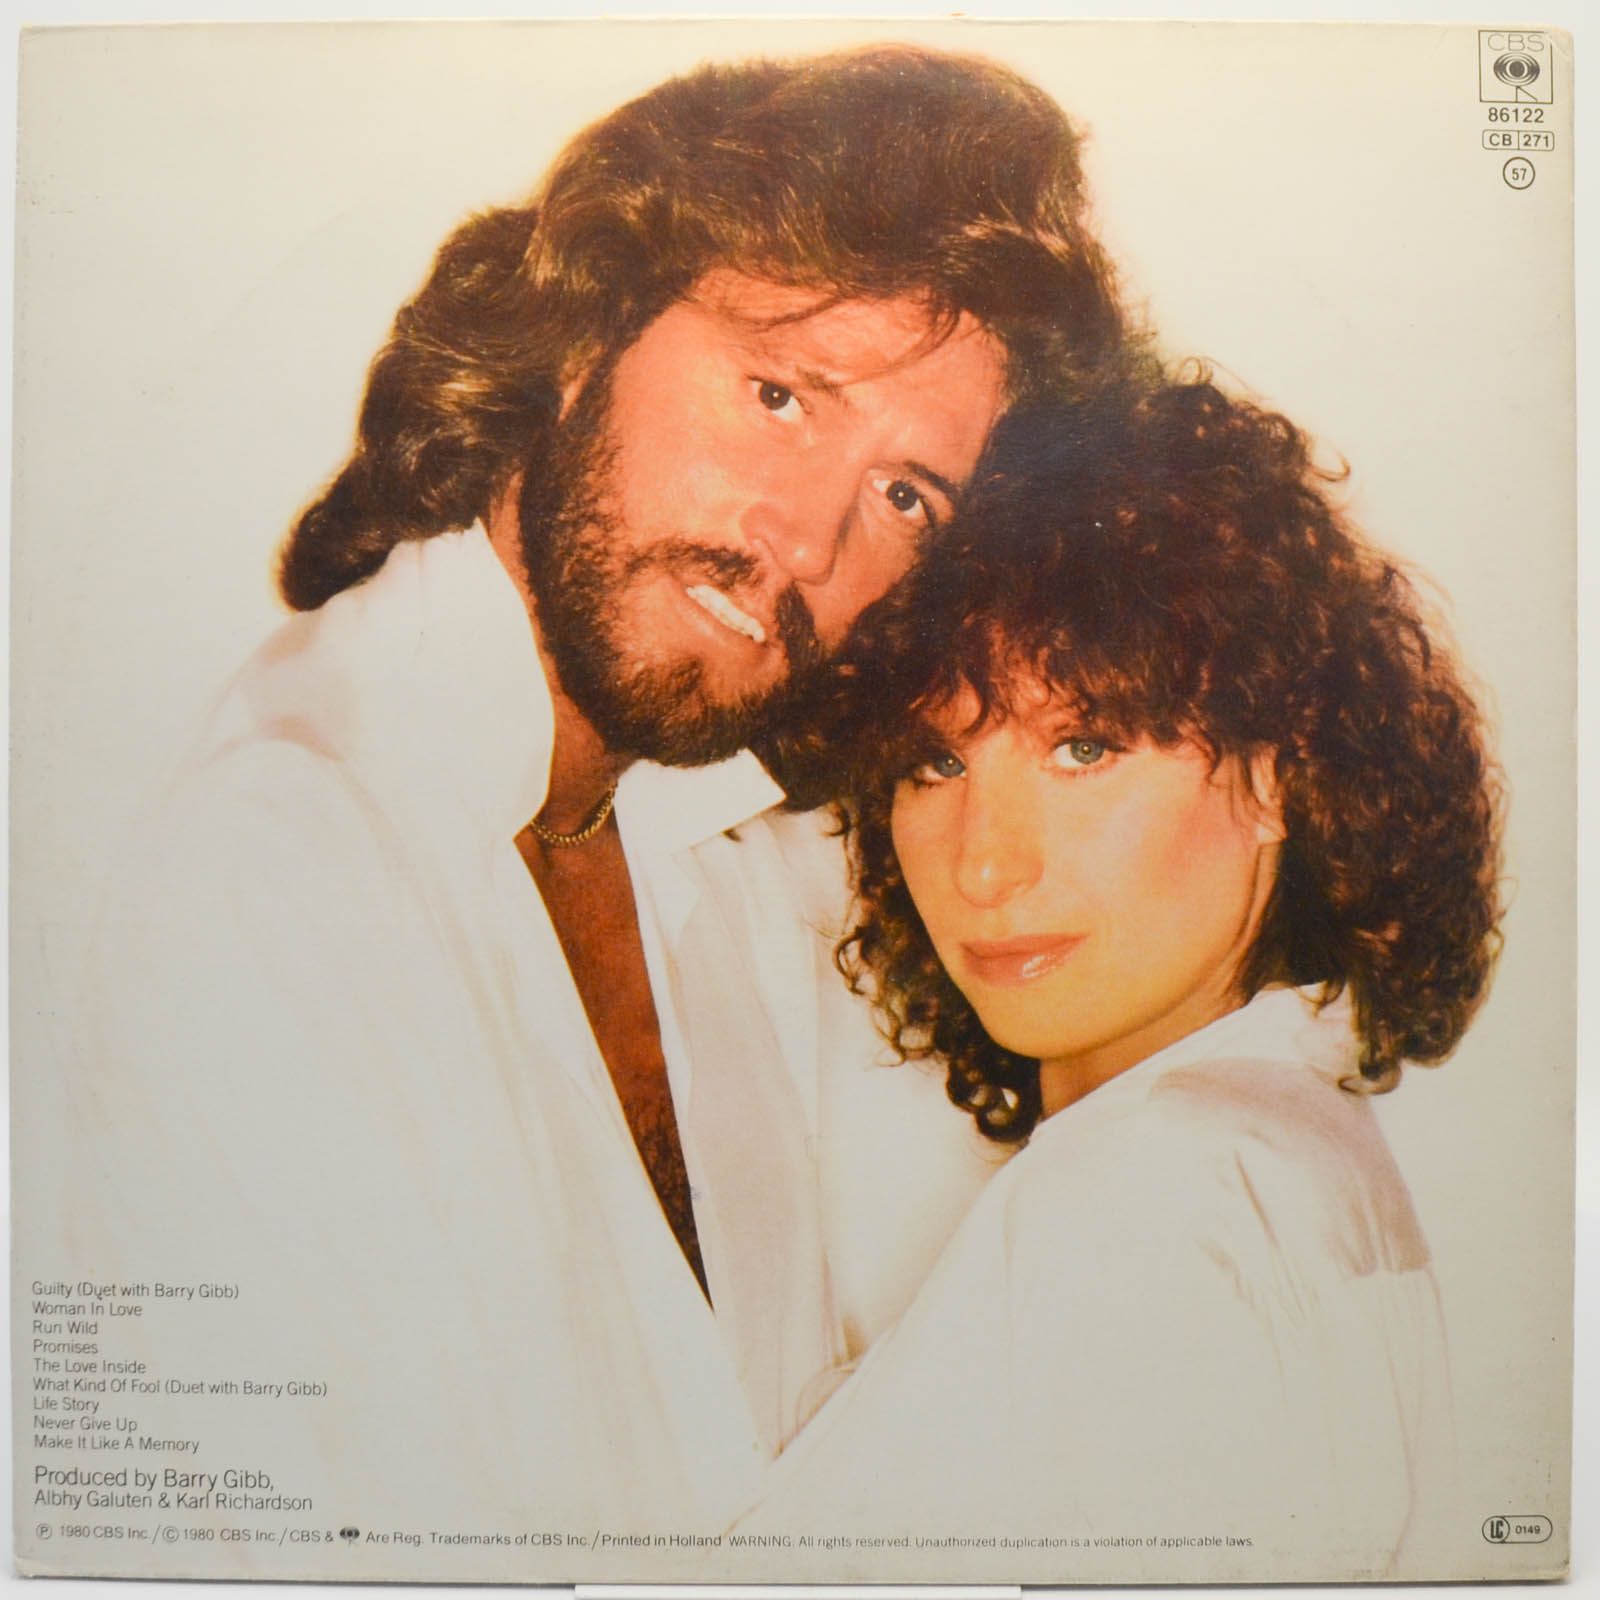 Streisand — Guilty, 1980